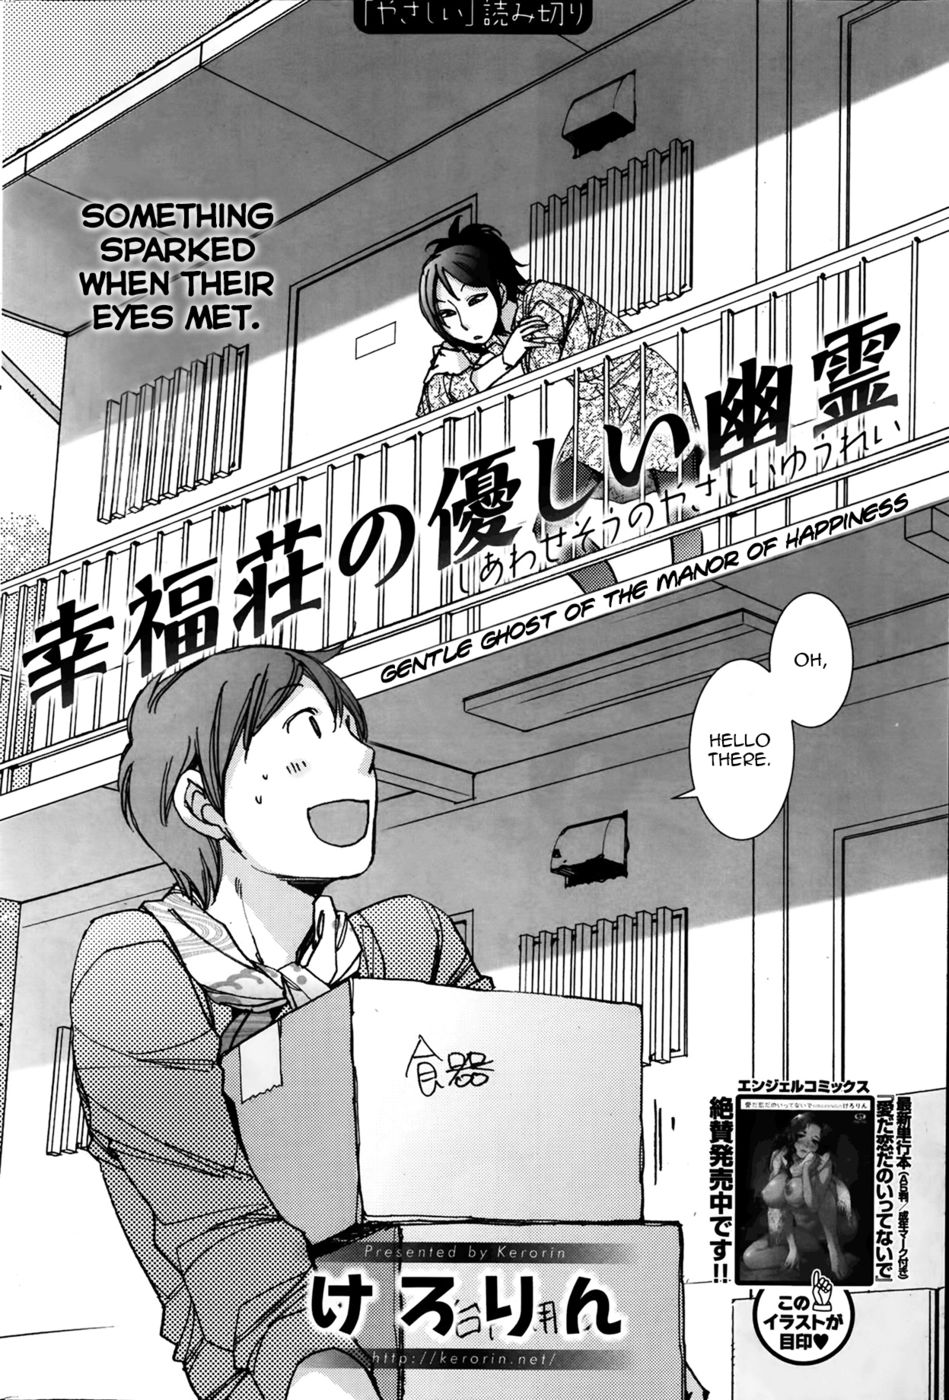 Hentai Manga Comic-Gentle Ghost of the Manor of Happiness-Read-2